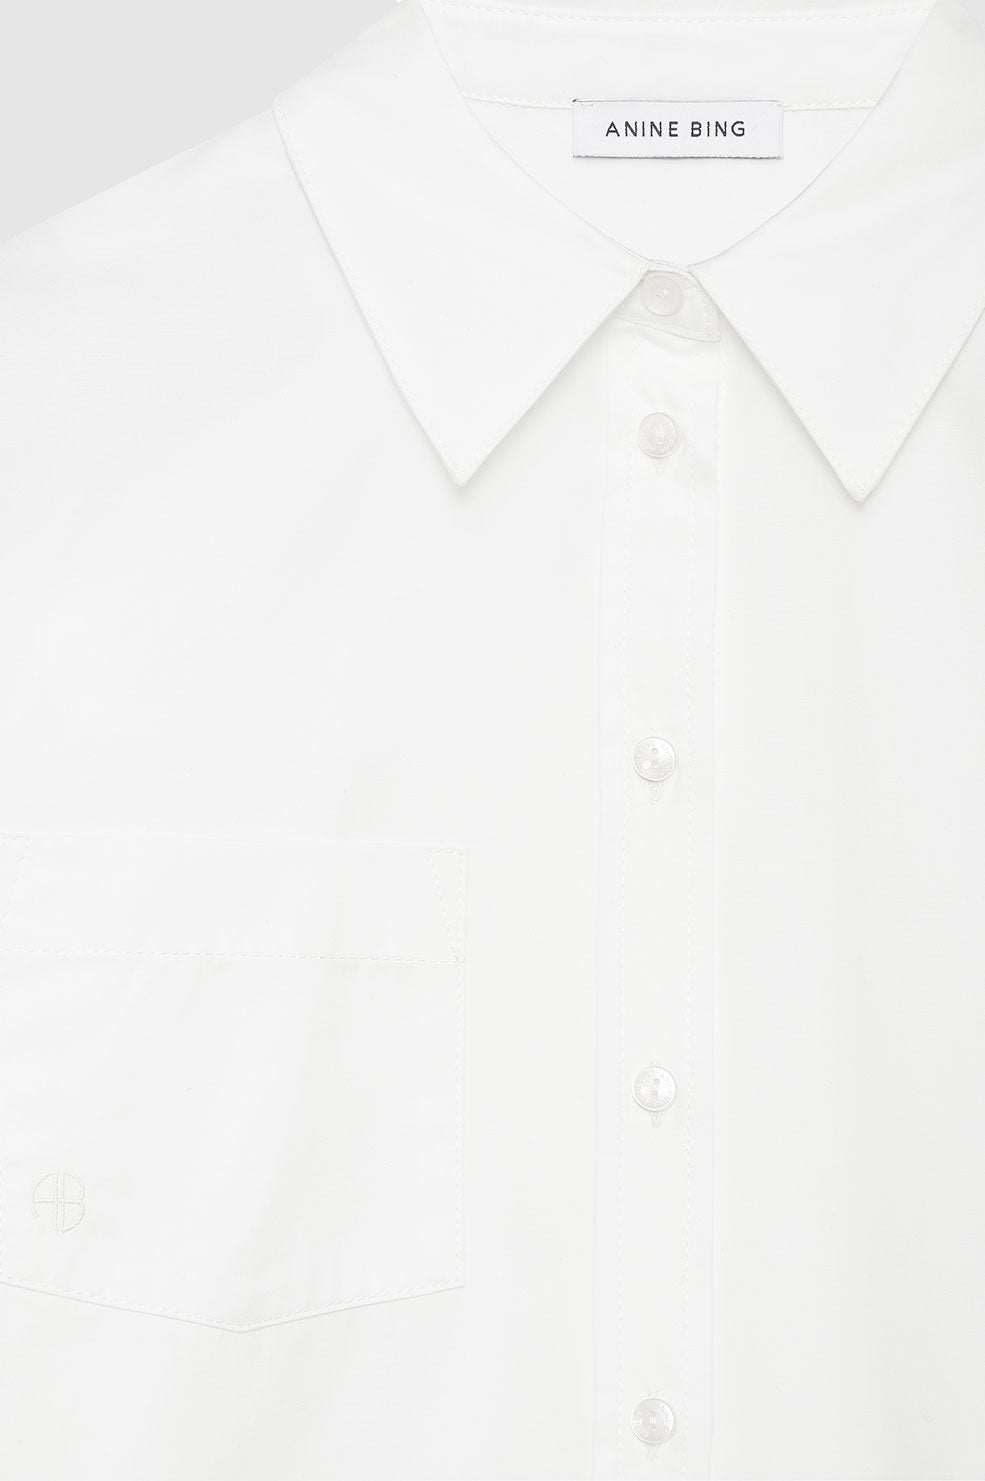 ANINE BING Maxine Shirt - White - Detail View